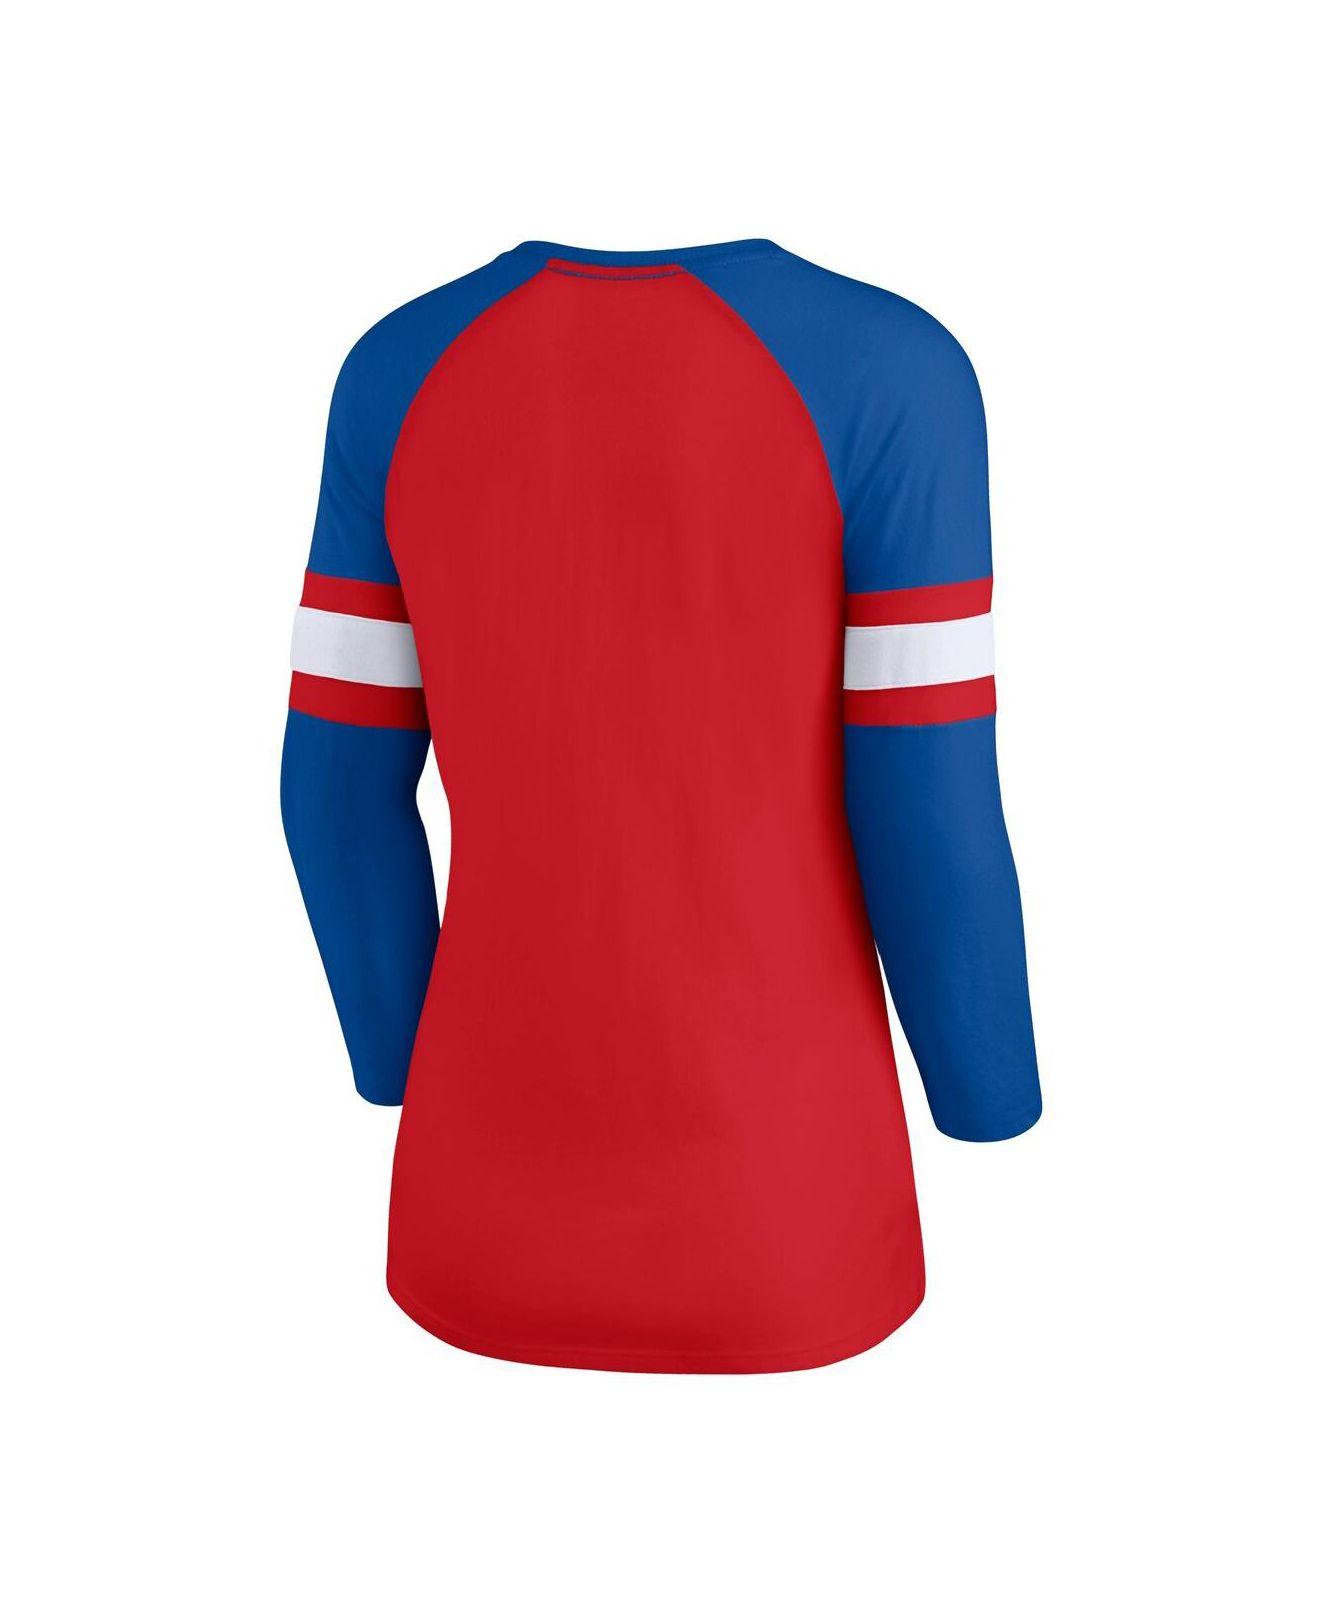 Philadelphia Phillies Fanatics Branded Women's Fan T-Shirt Combo Set -  Red/Royal